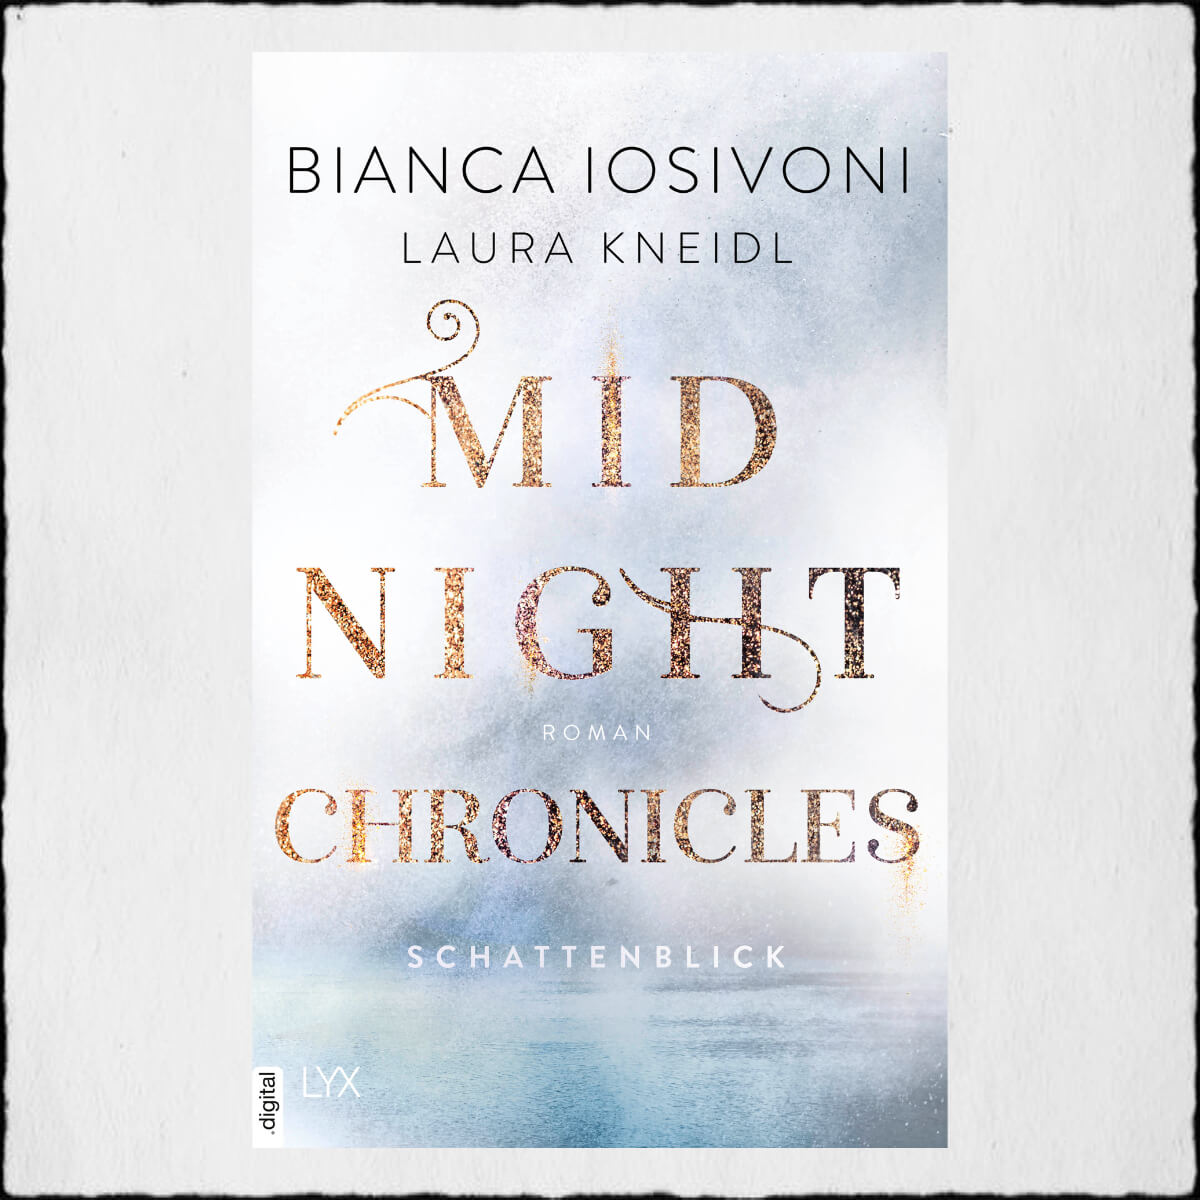 Bianca Iosivoni, Laura Kneidl "Schattenblick - Midnight Chronicles Band 1" ©2020 LYX by Bastei Lübbe AG